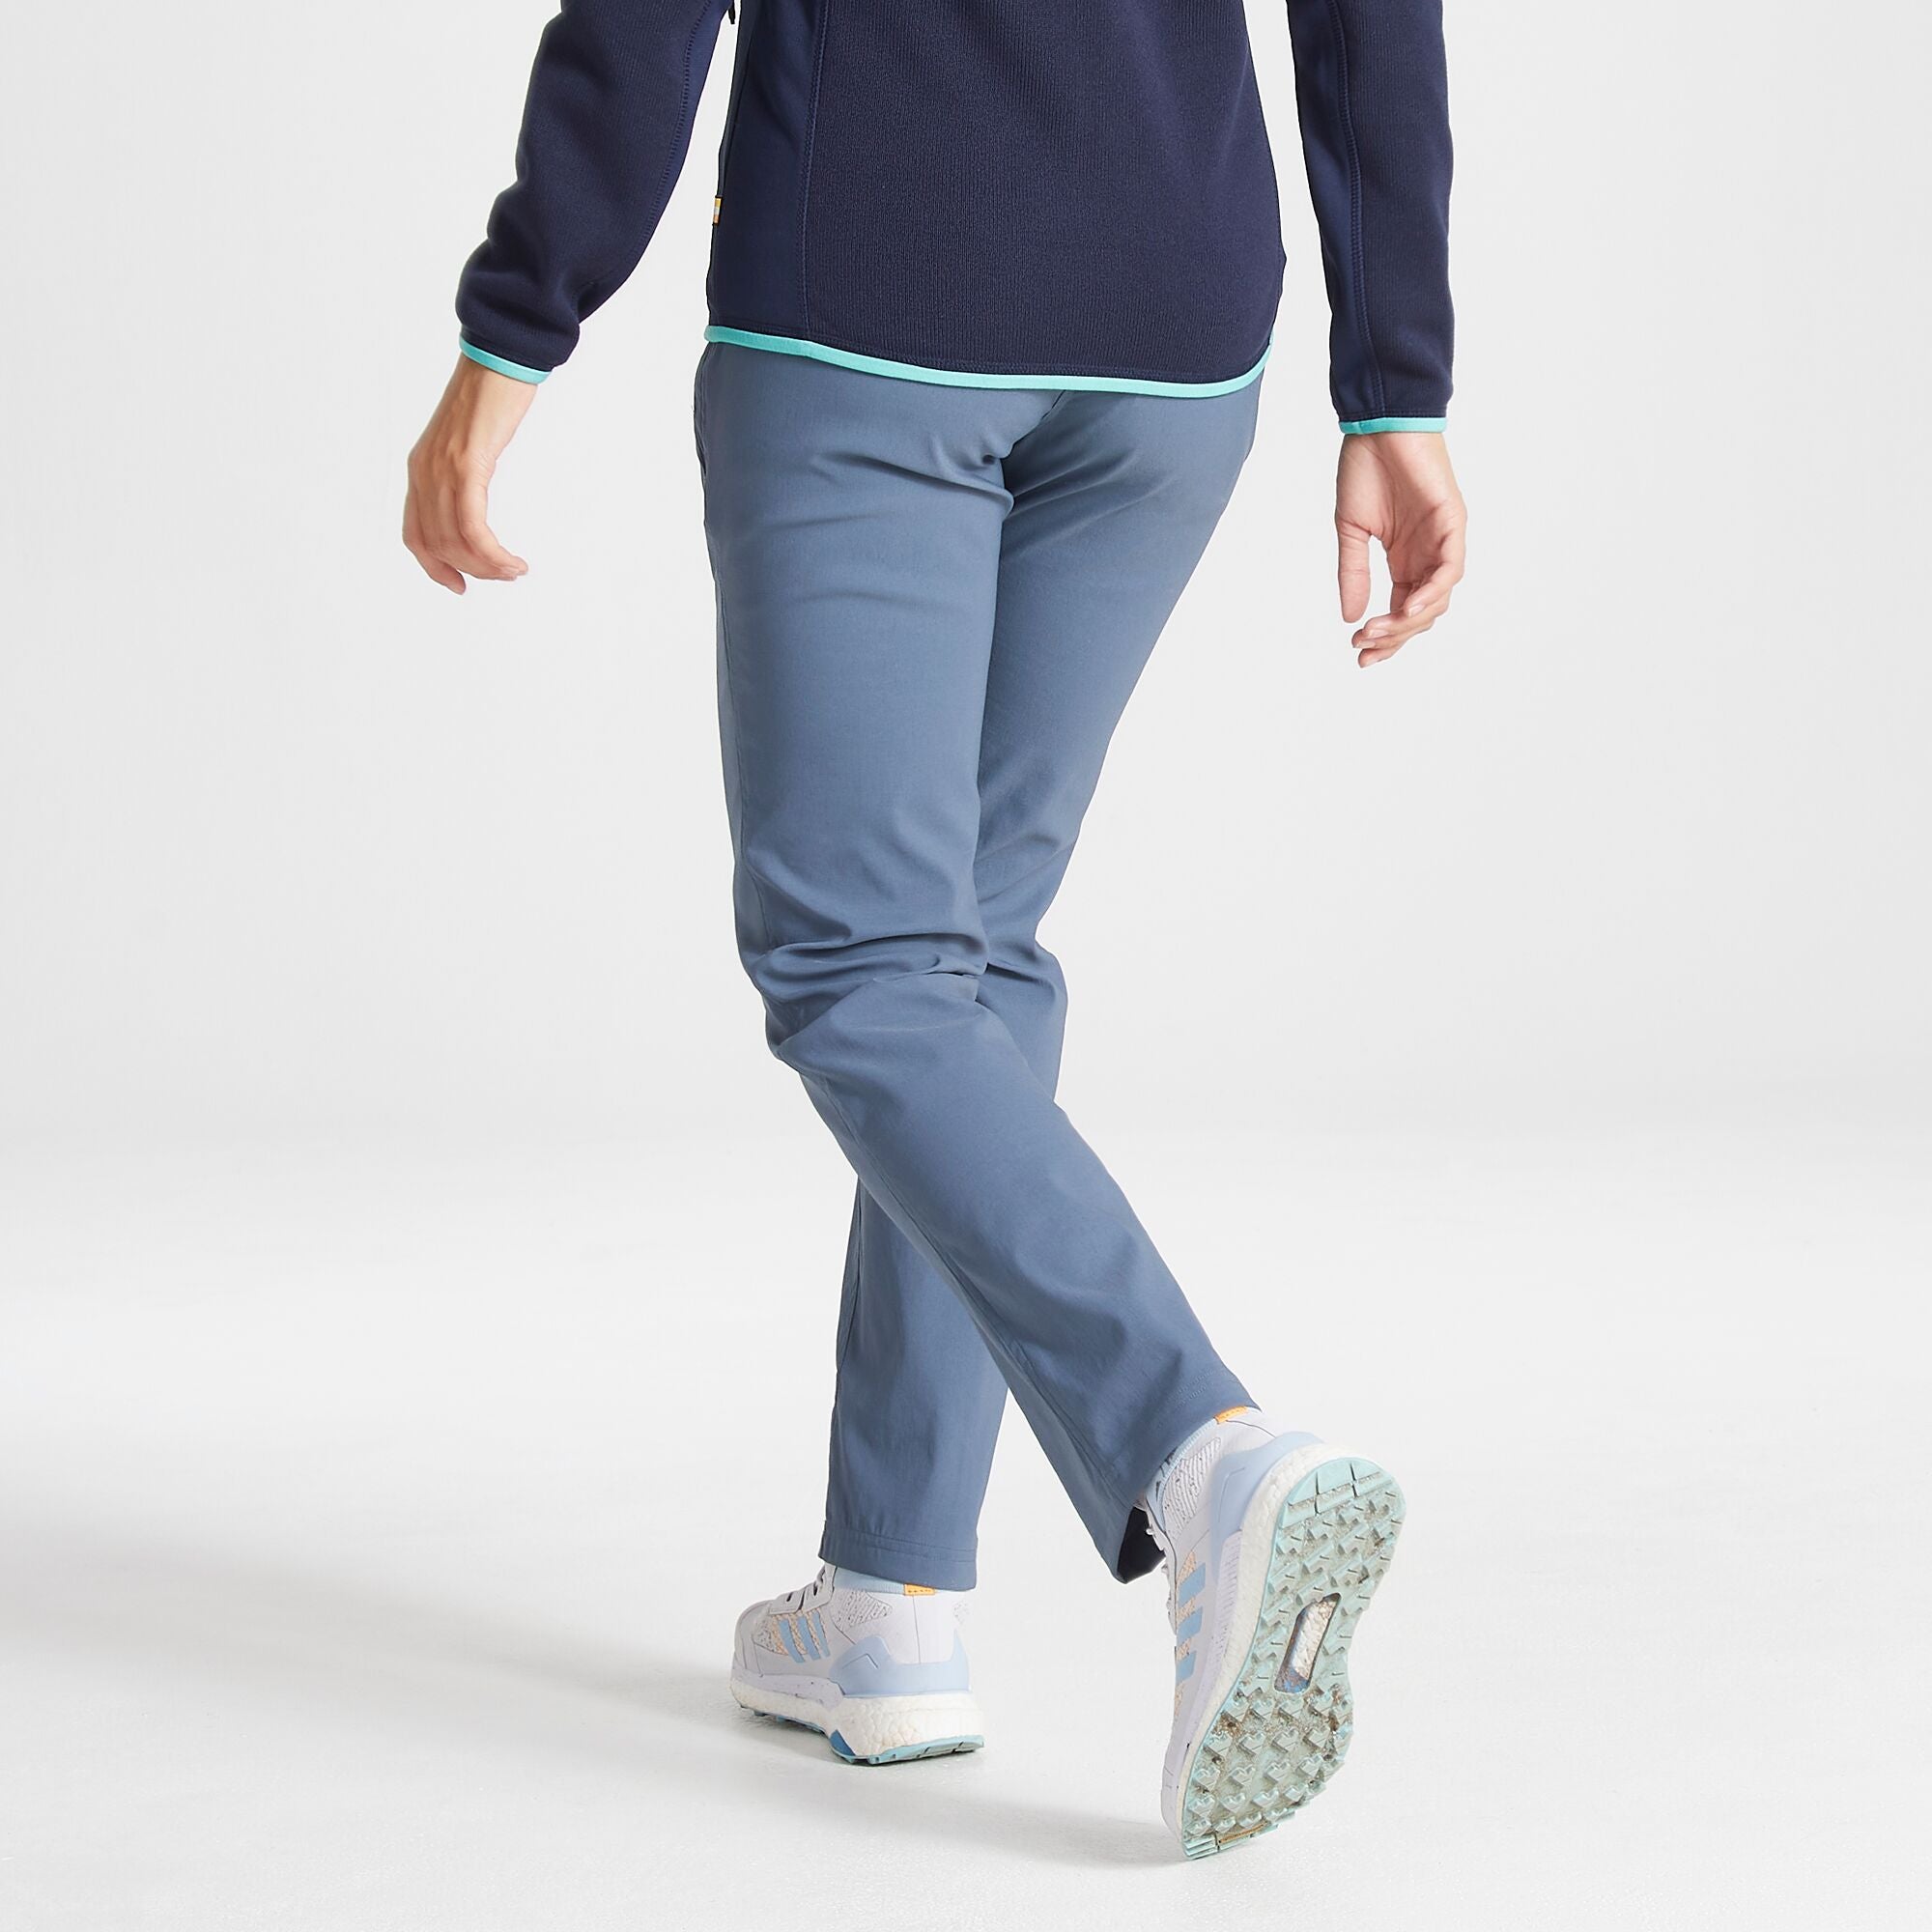 donhobo Womens Waterproof Walking Trousers Zipper Pockets Lightweight  Stretch Outdoor Hiking Pants Quick Dry Cargo Trousers Dark Grey XS :  Amazon.co.uk: Fashion